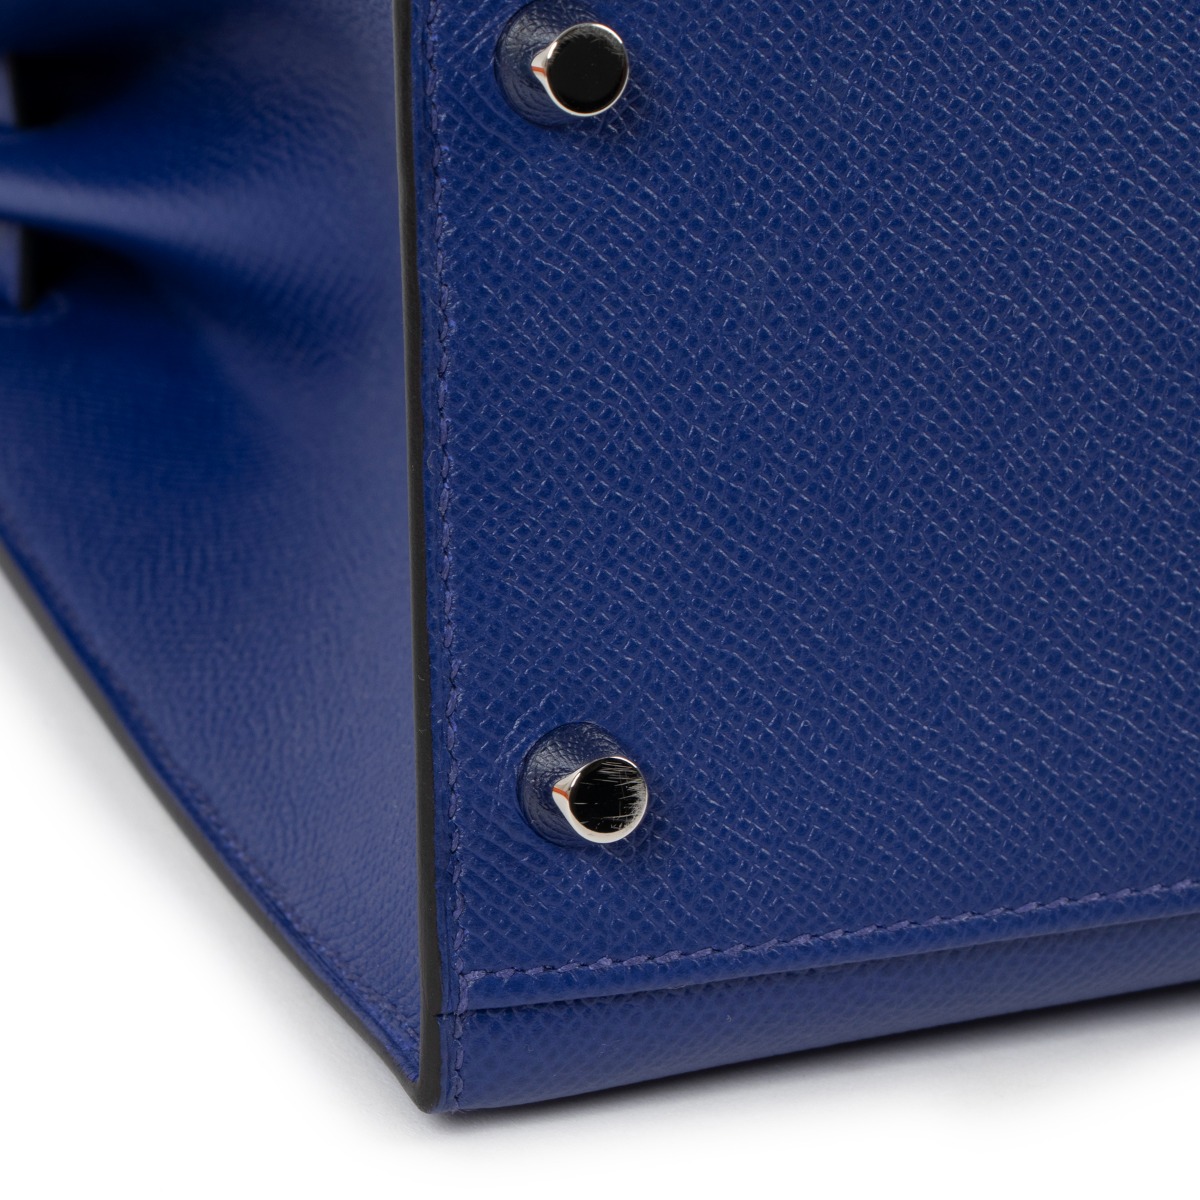 Hermès Kelly 32 Sellier Blue Atoll Epsom Palladium Hardware